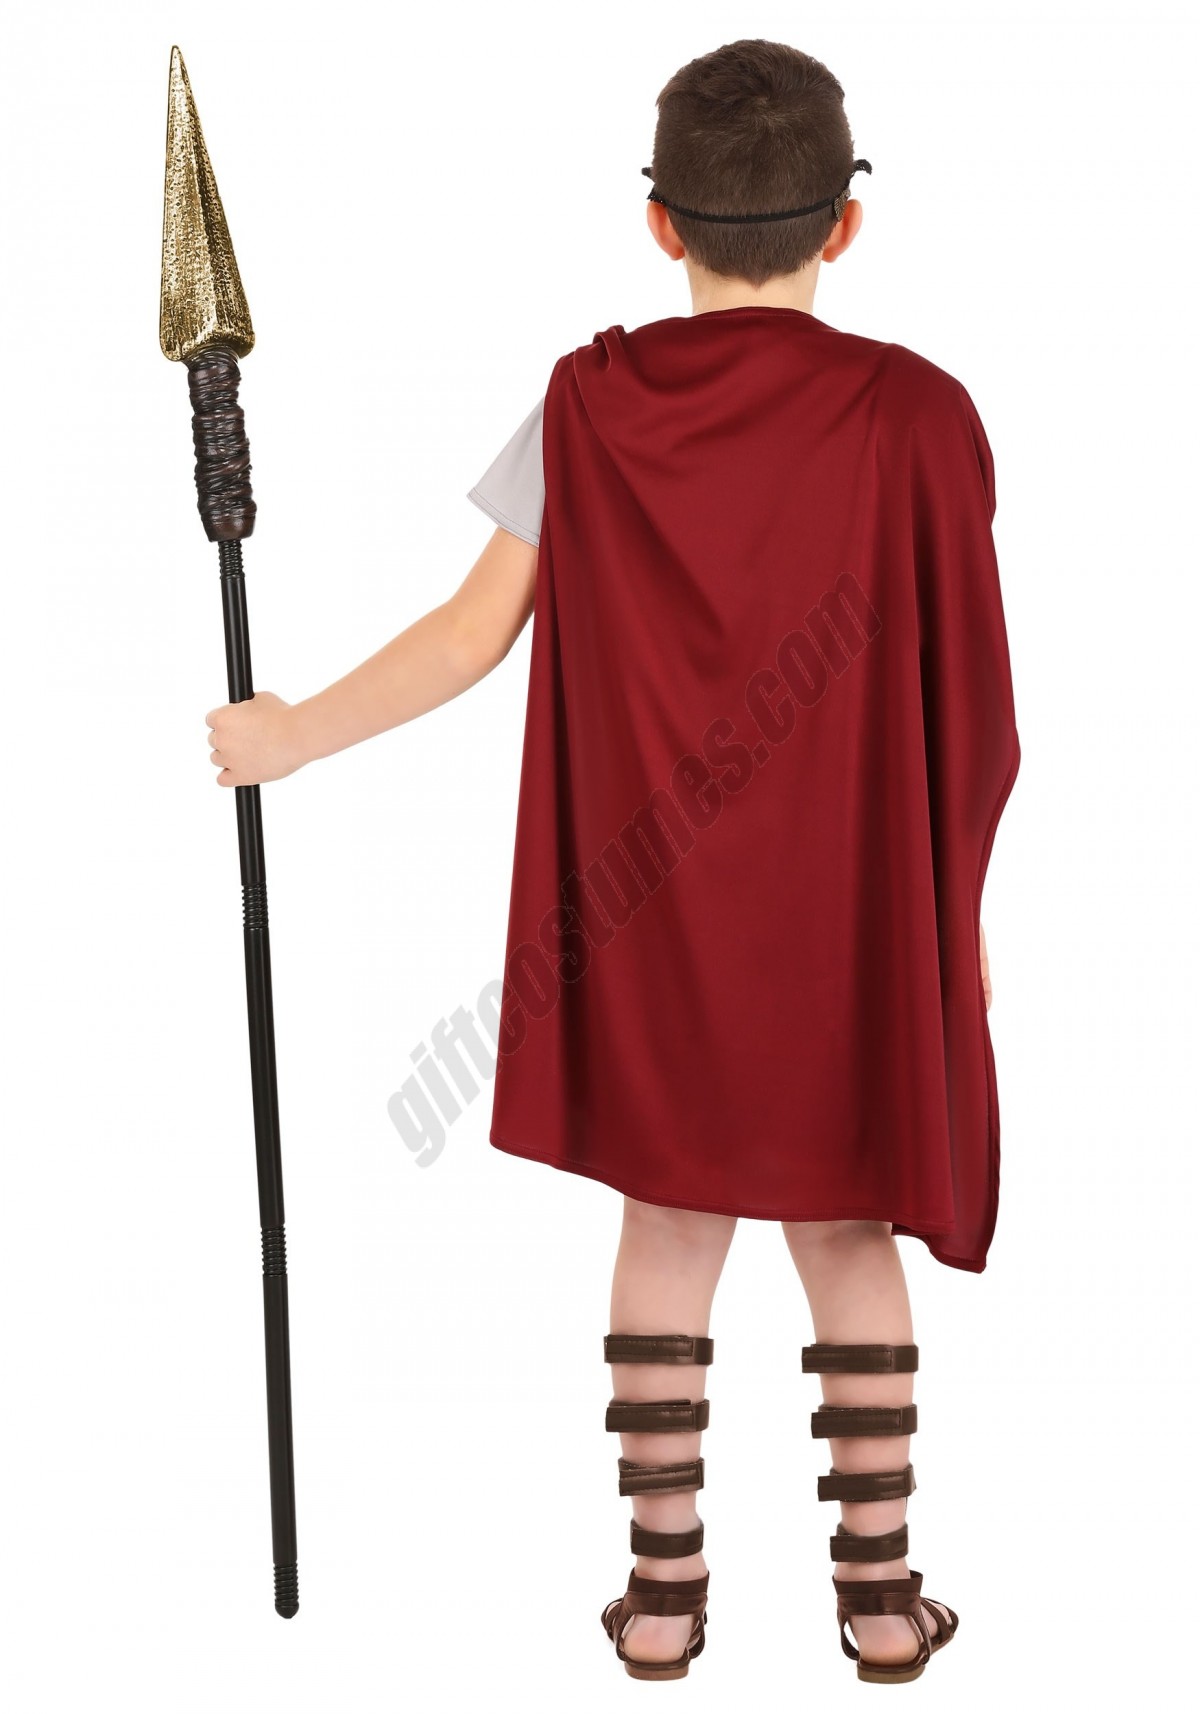 Kids Roman Warrior Costume Promotions - -1